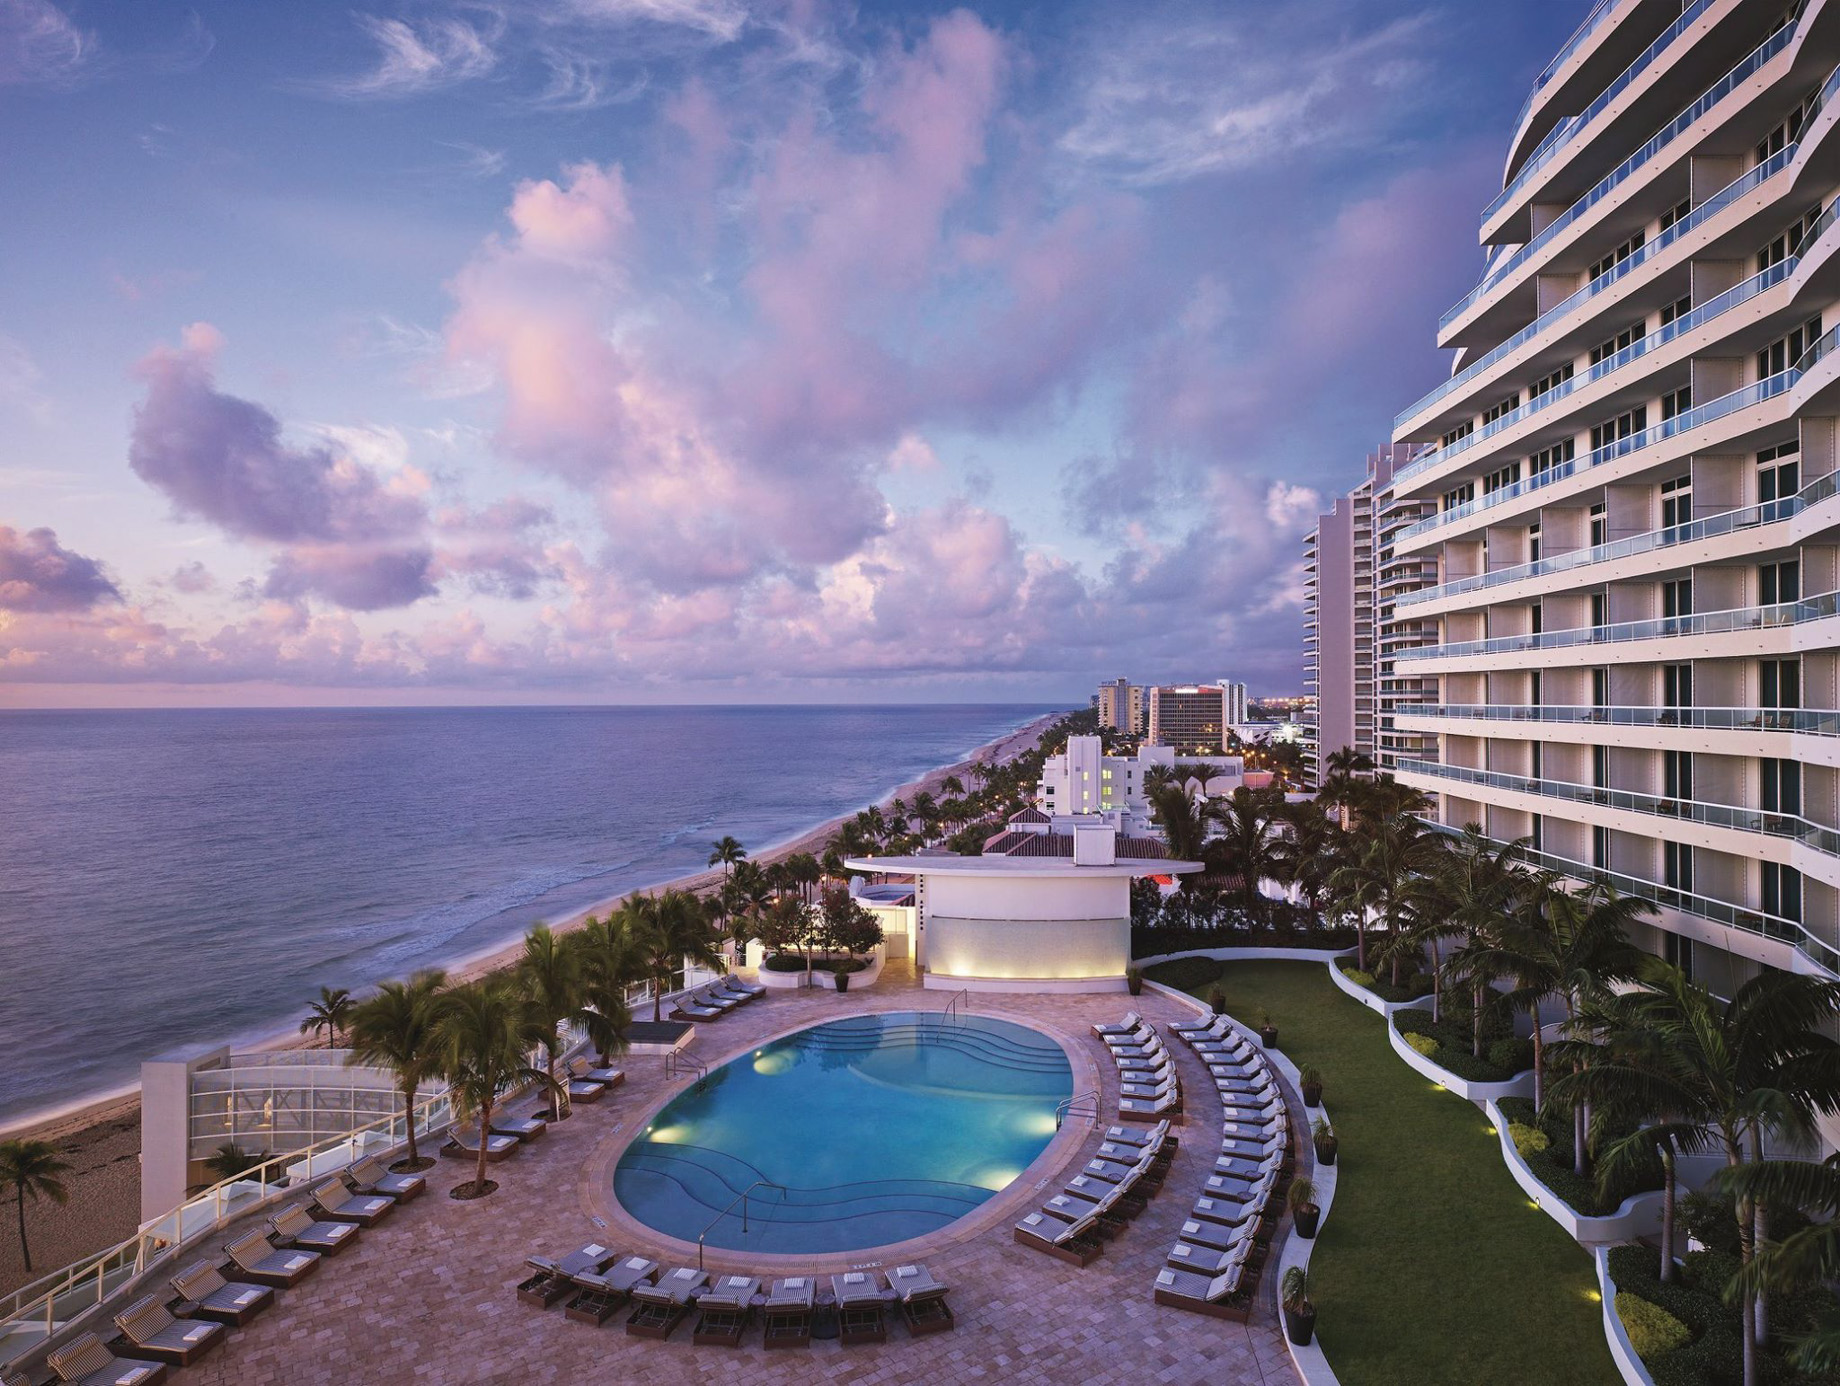 The Ritz-Carlton, Fort Lauderdale Hotel - Fort Lauderdale, FL, USA - Exterior Pool Oceanview Sunset